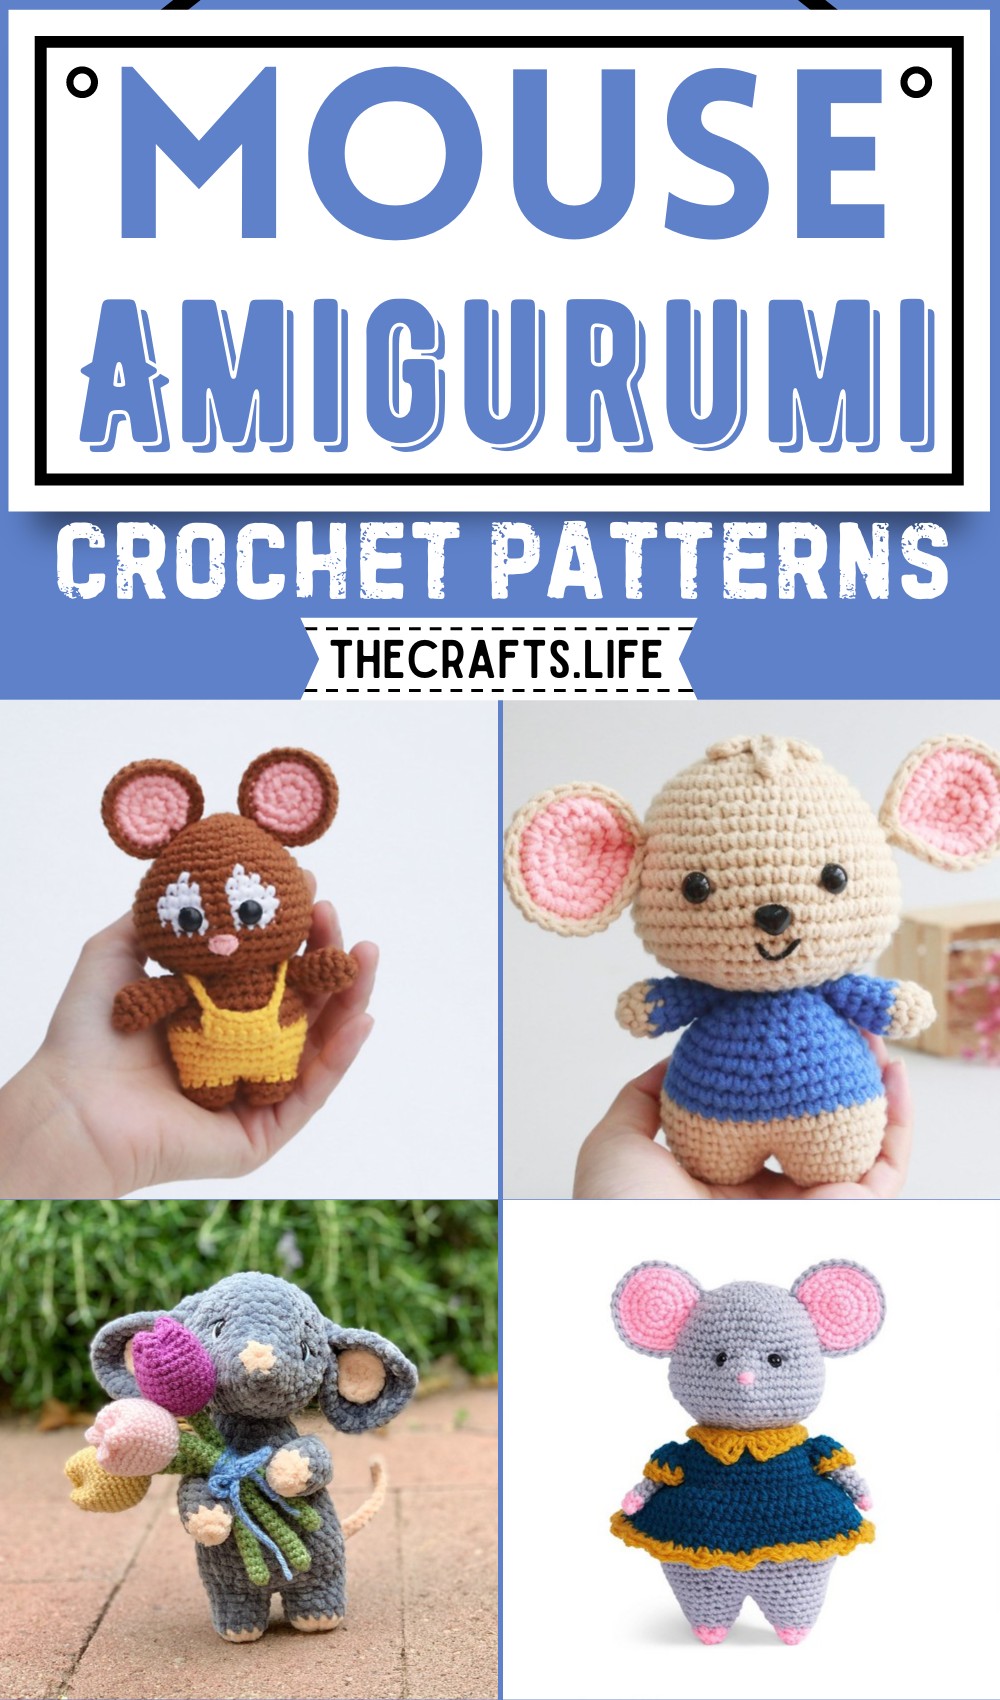 Crochet Mouse Amigurumi Patterns